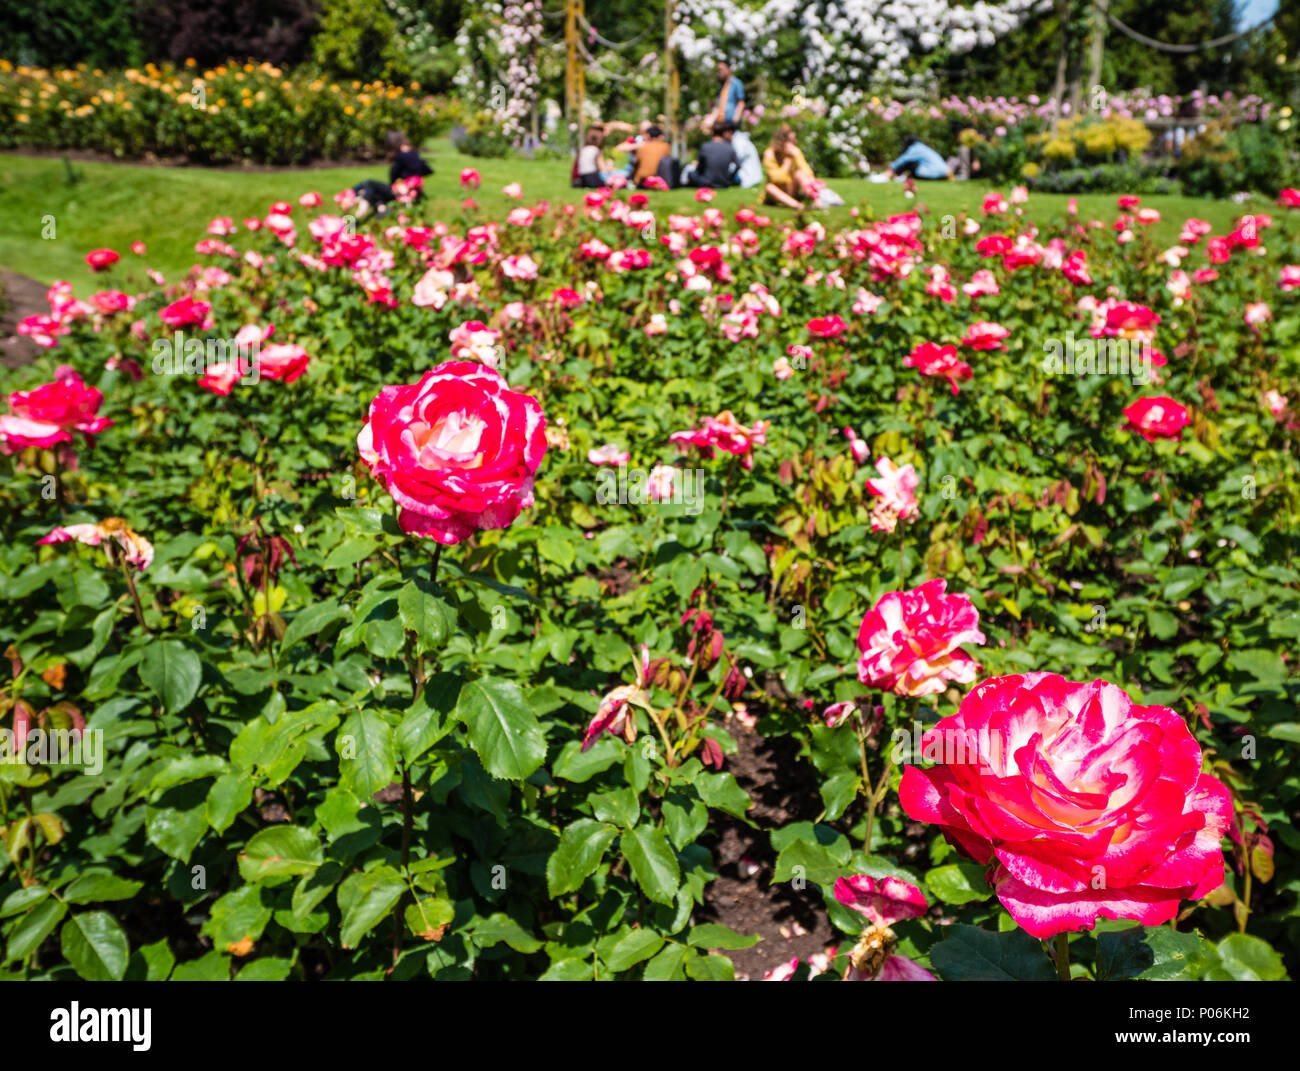 People Relaxing, Queen Mary's Gardens, Rose Garden, Regents Park, London, England, UK, GB. Stock Photo